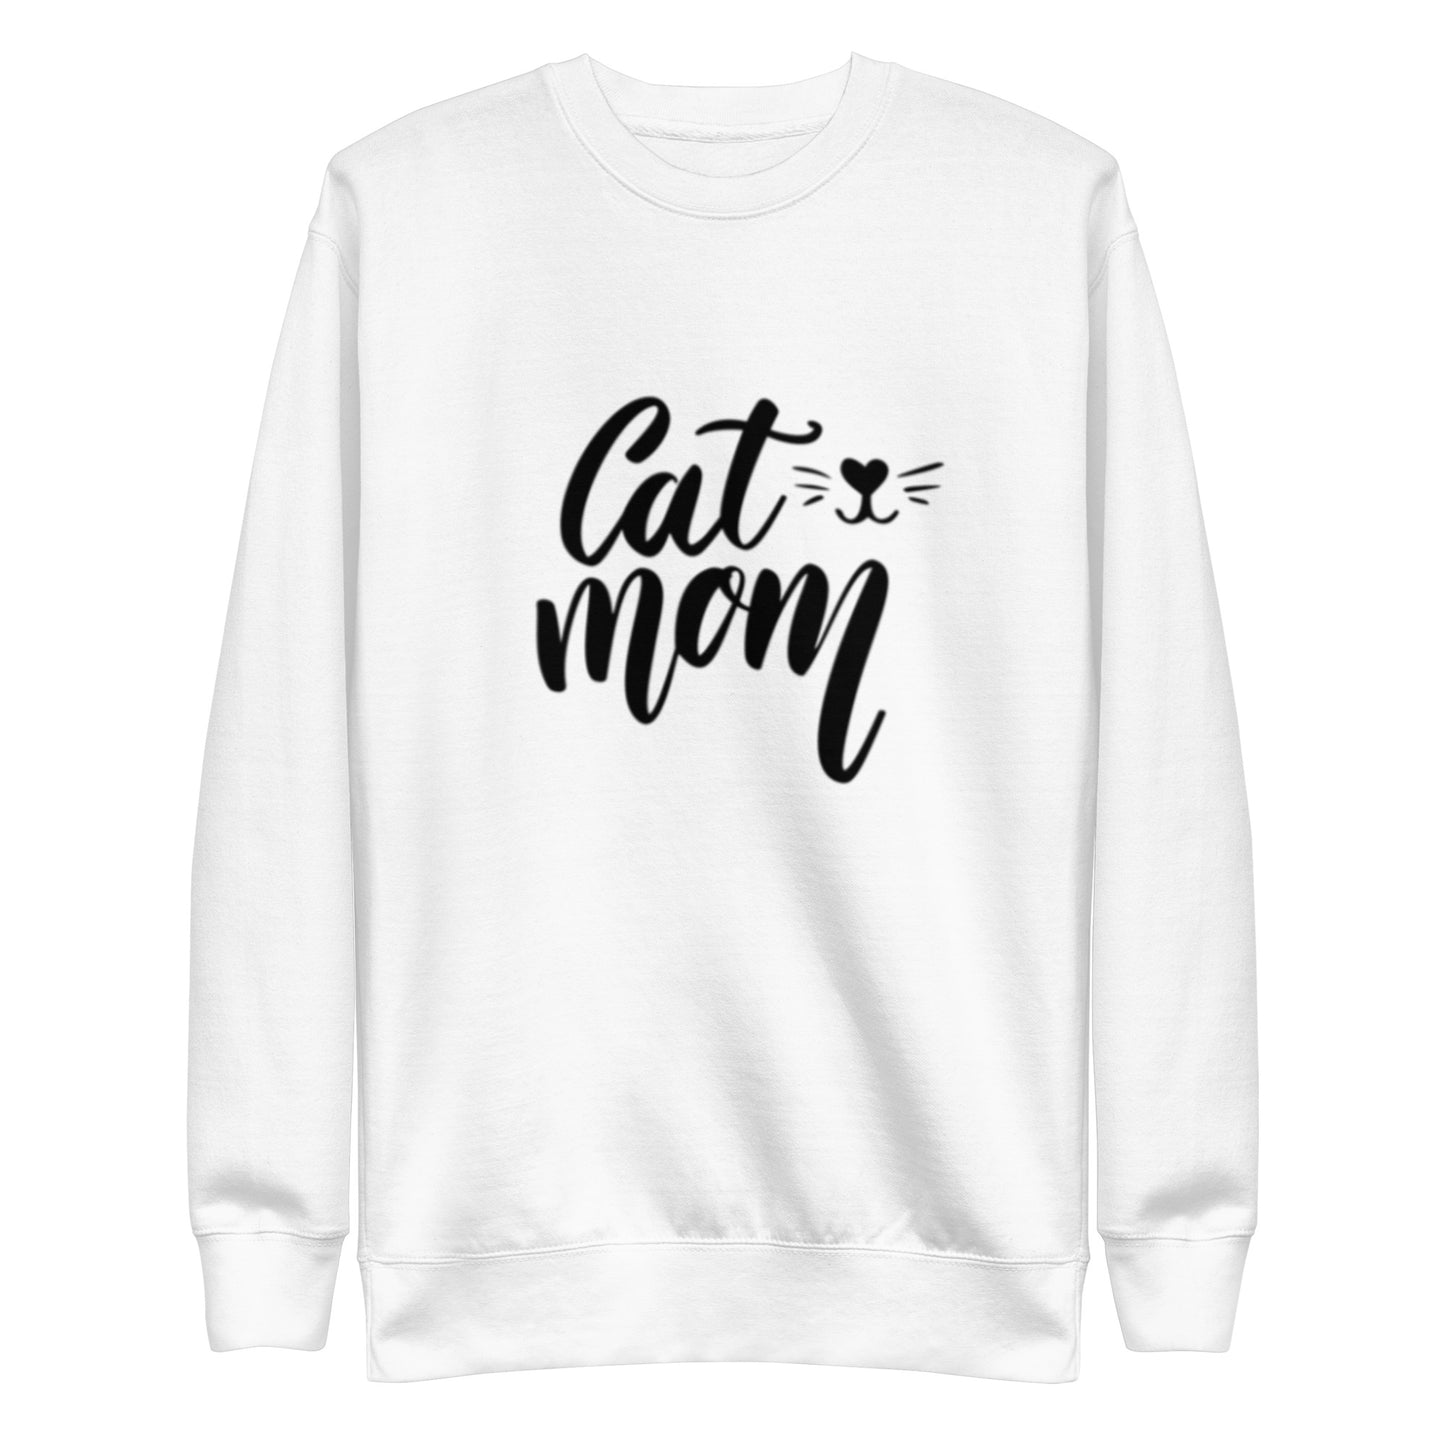 Cat Mom - Sweatshirt